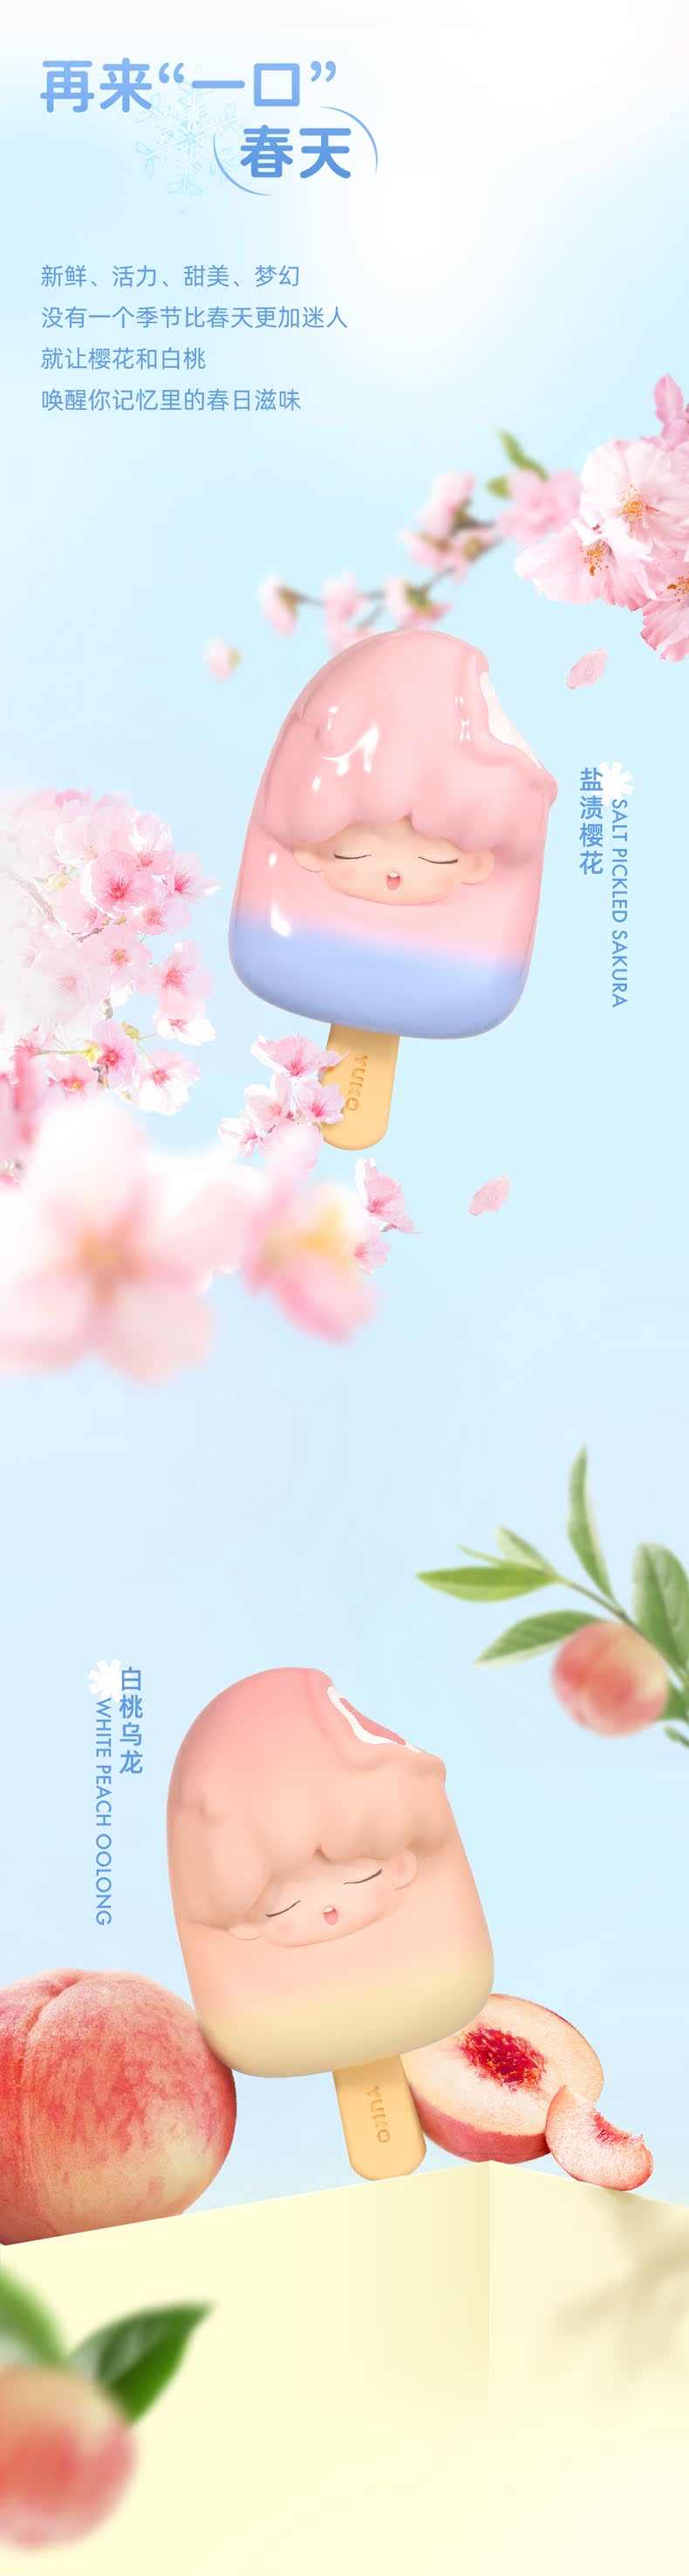 [JOTOYS] YUMO - Iced Mini Popsicles Series Blind Box